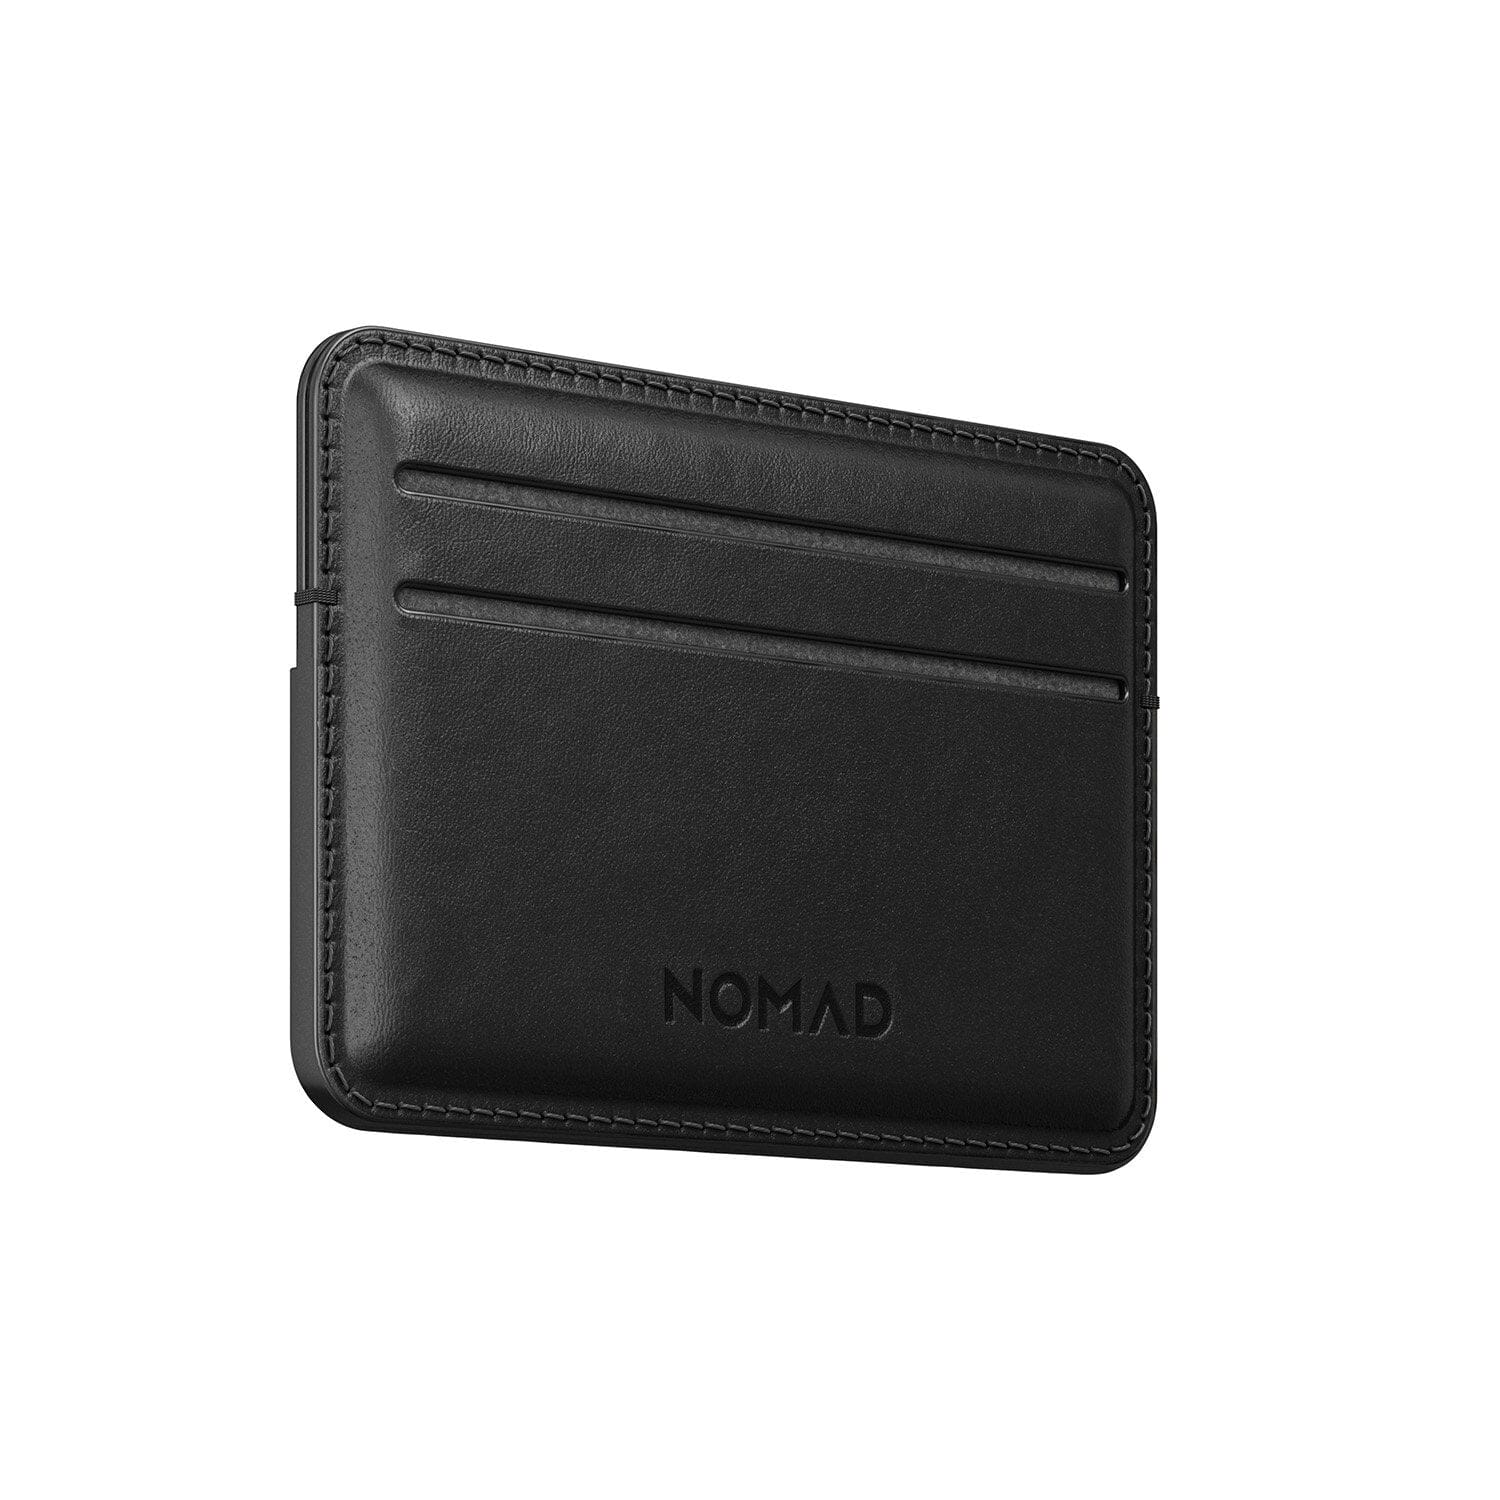 NOMAD Horween Leather Card Wallet, Rustic Brown/Black Wallet NOMAD 